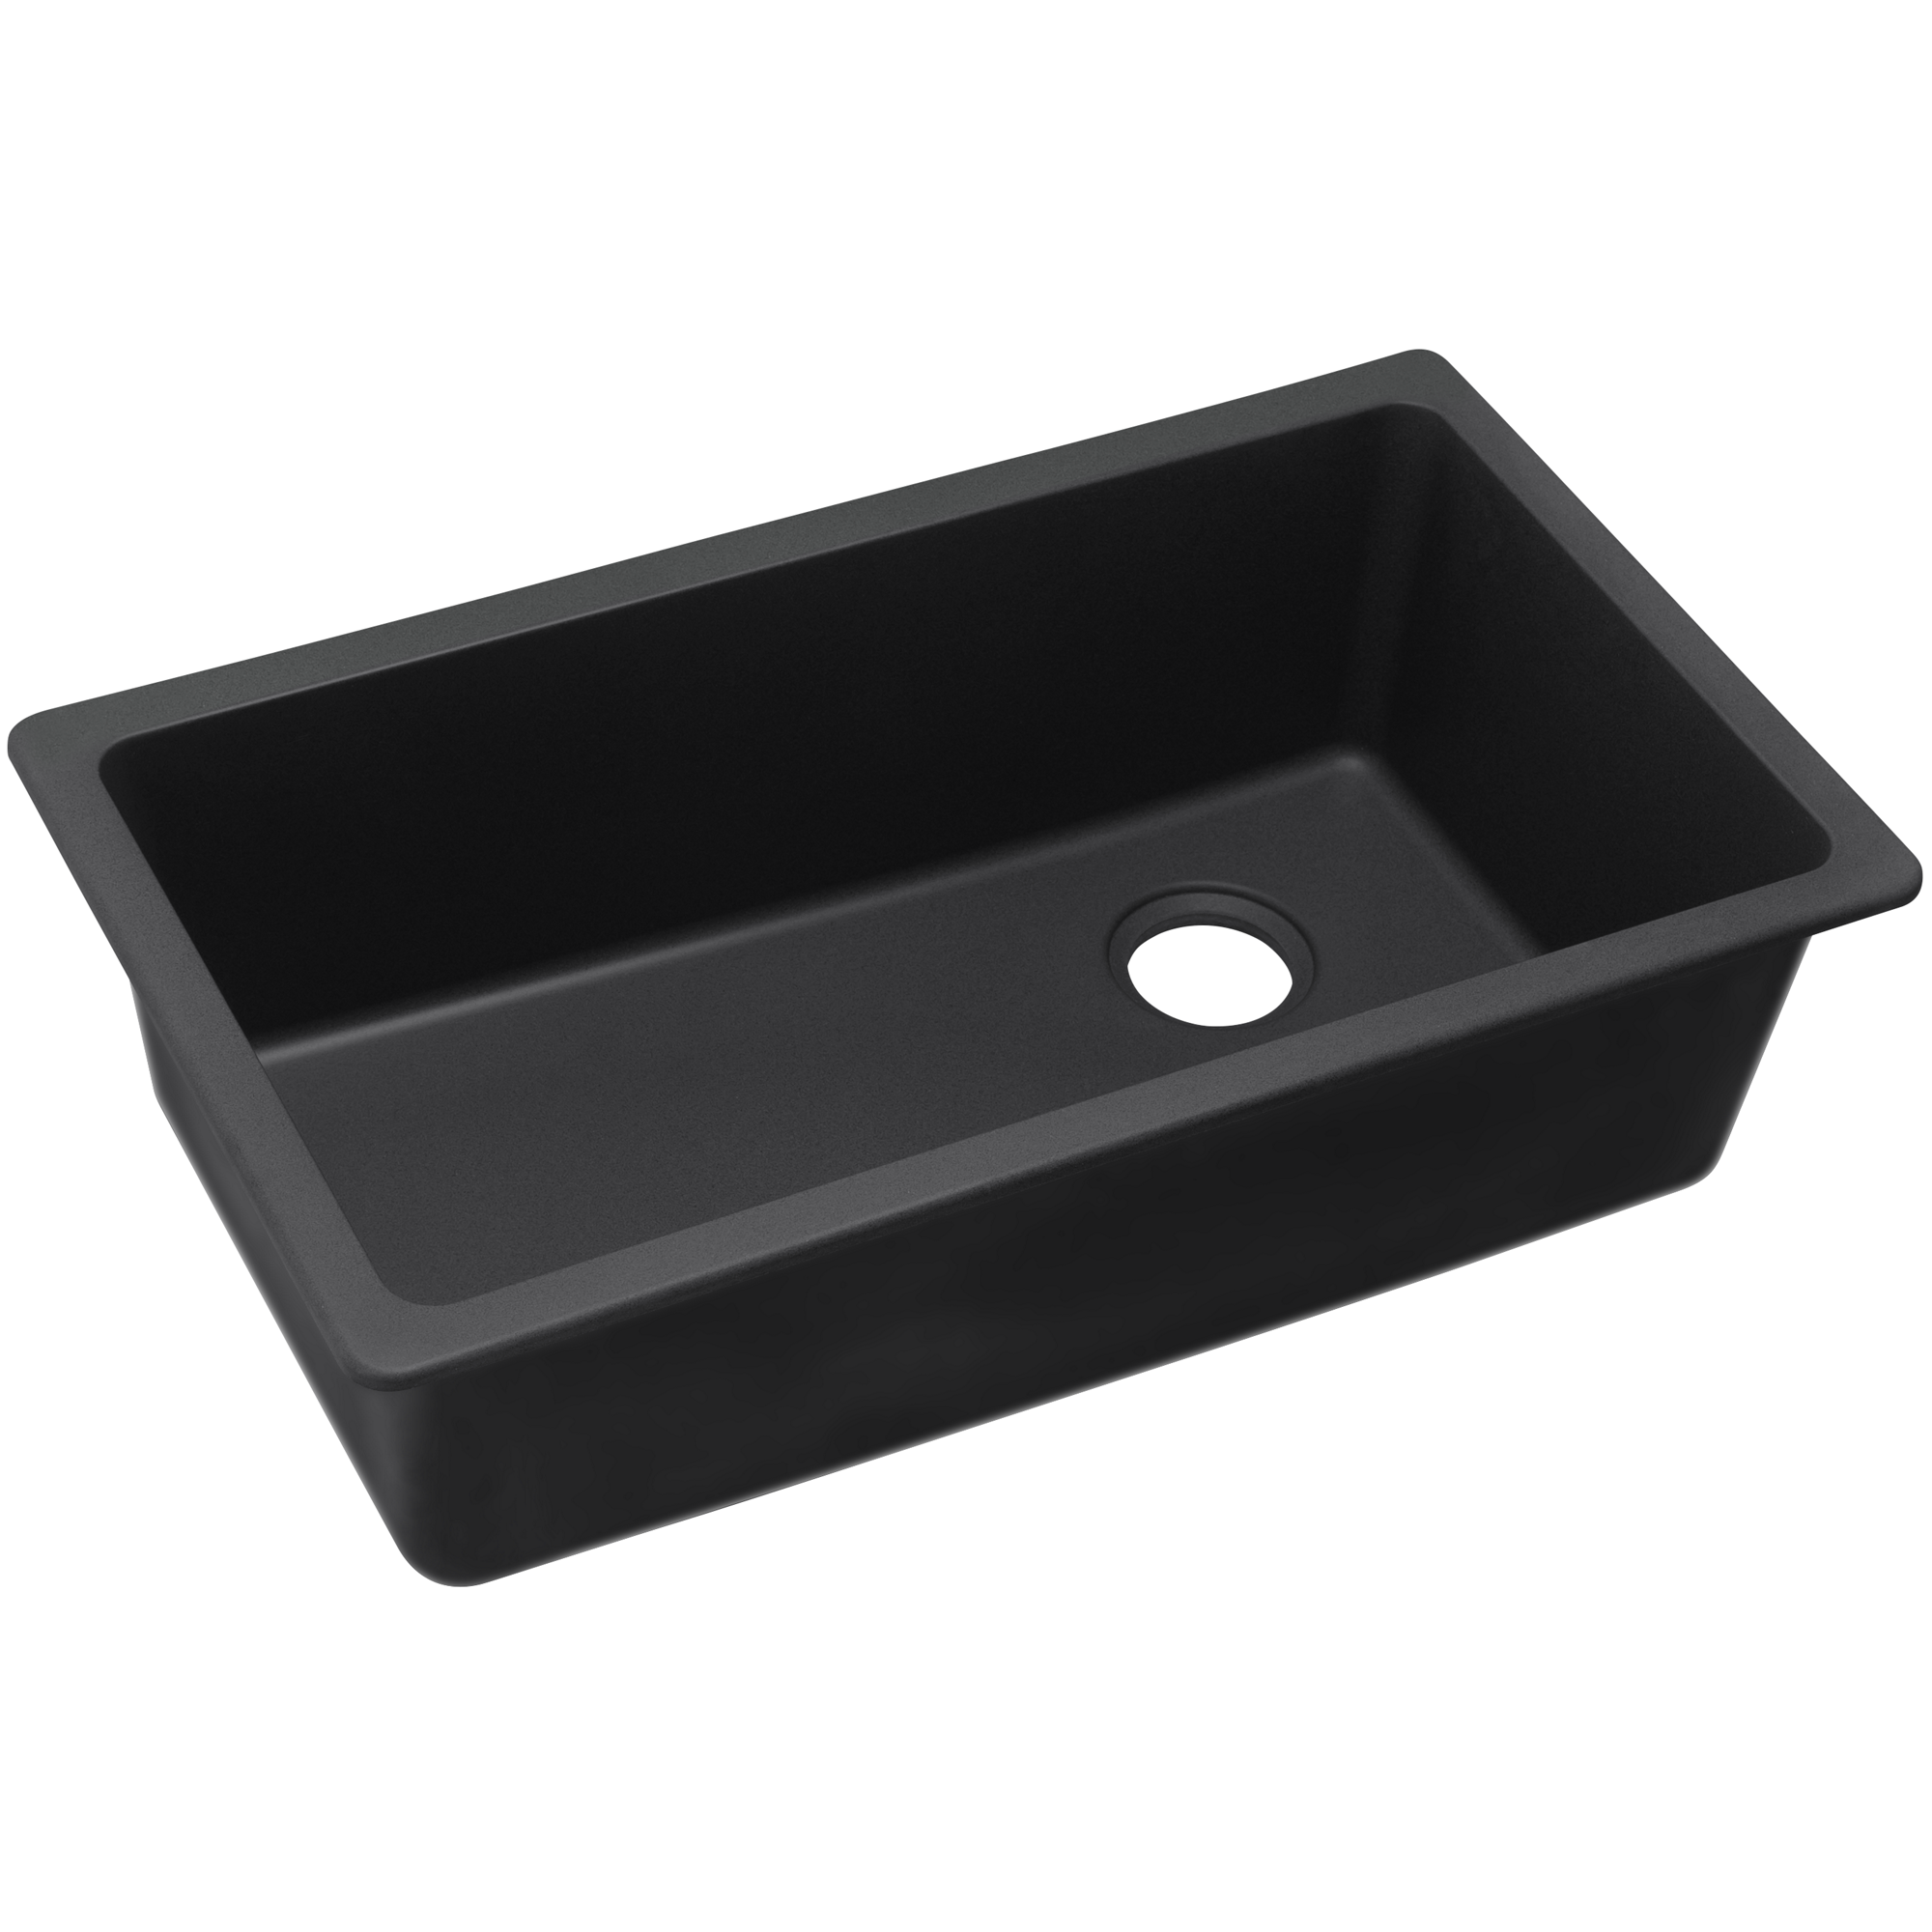 Quartz Classic 33x18-3/4x9-1/2" Single Bowl Sink in Black